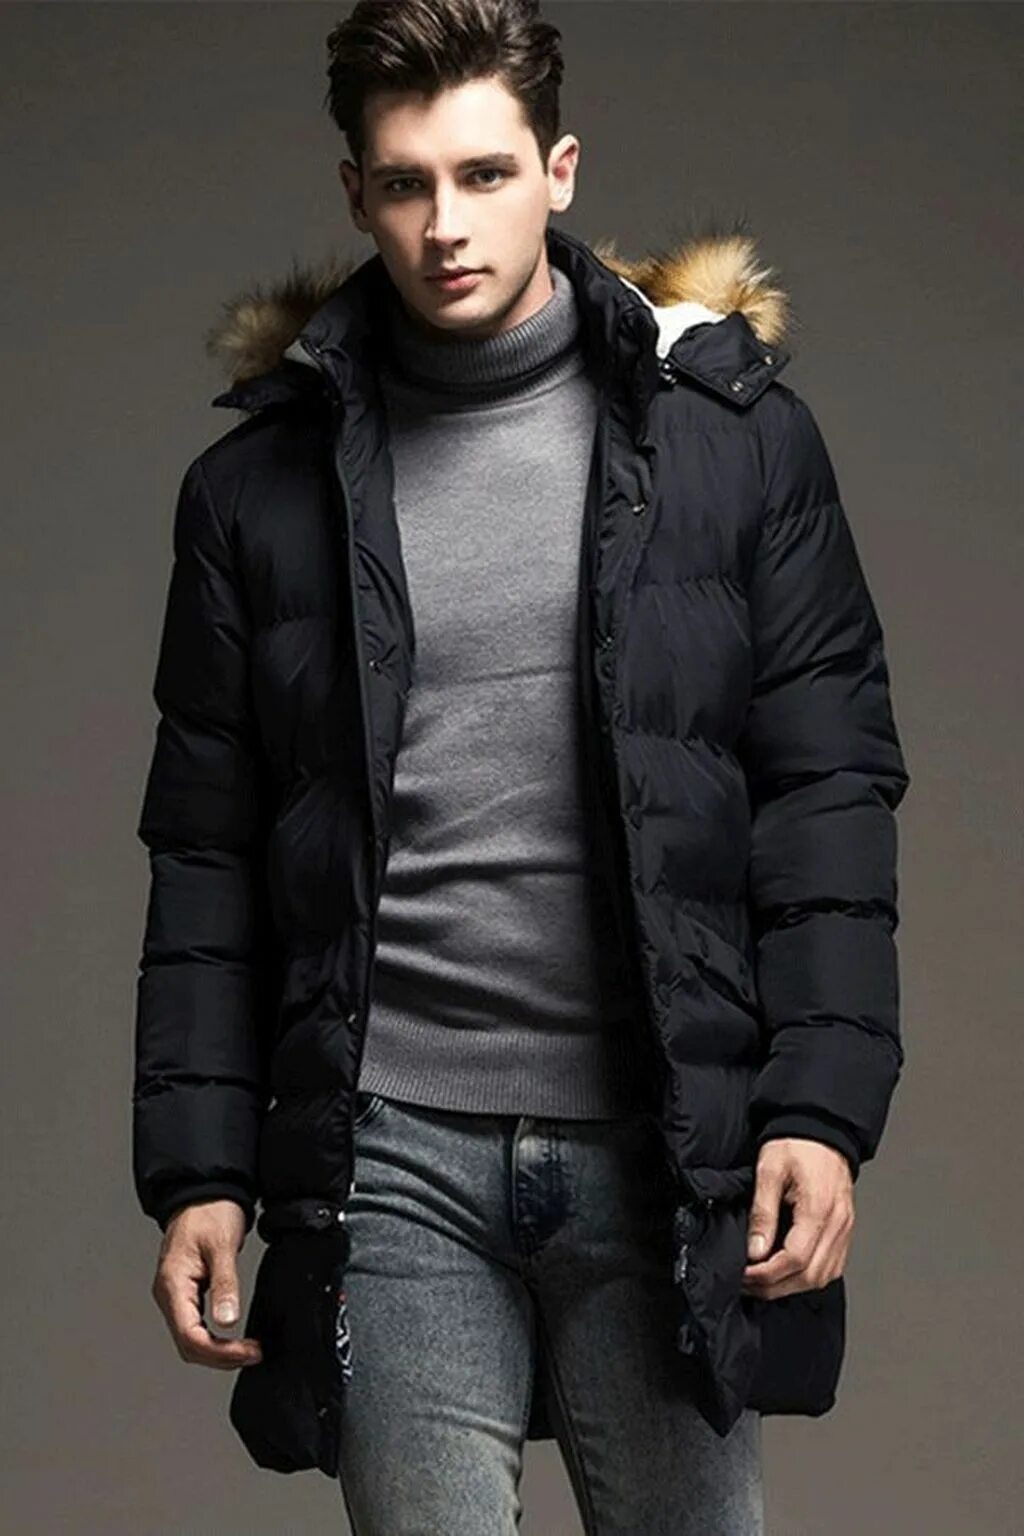 Пуховик зима мужская. Мужская зимняя одежда. Мужская одежда зима. Верхняя одежда для мужчин. Модная мужская зимняя одежда.